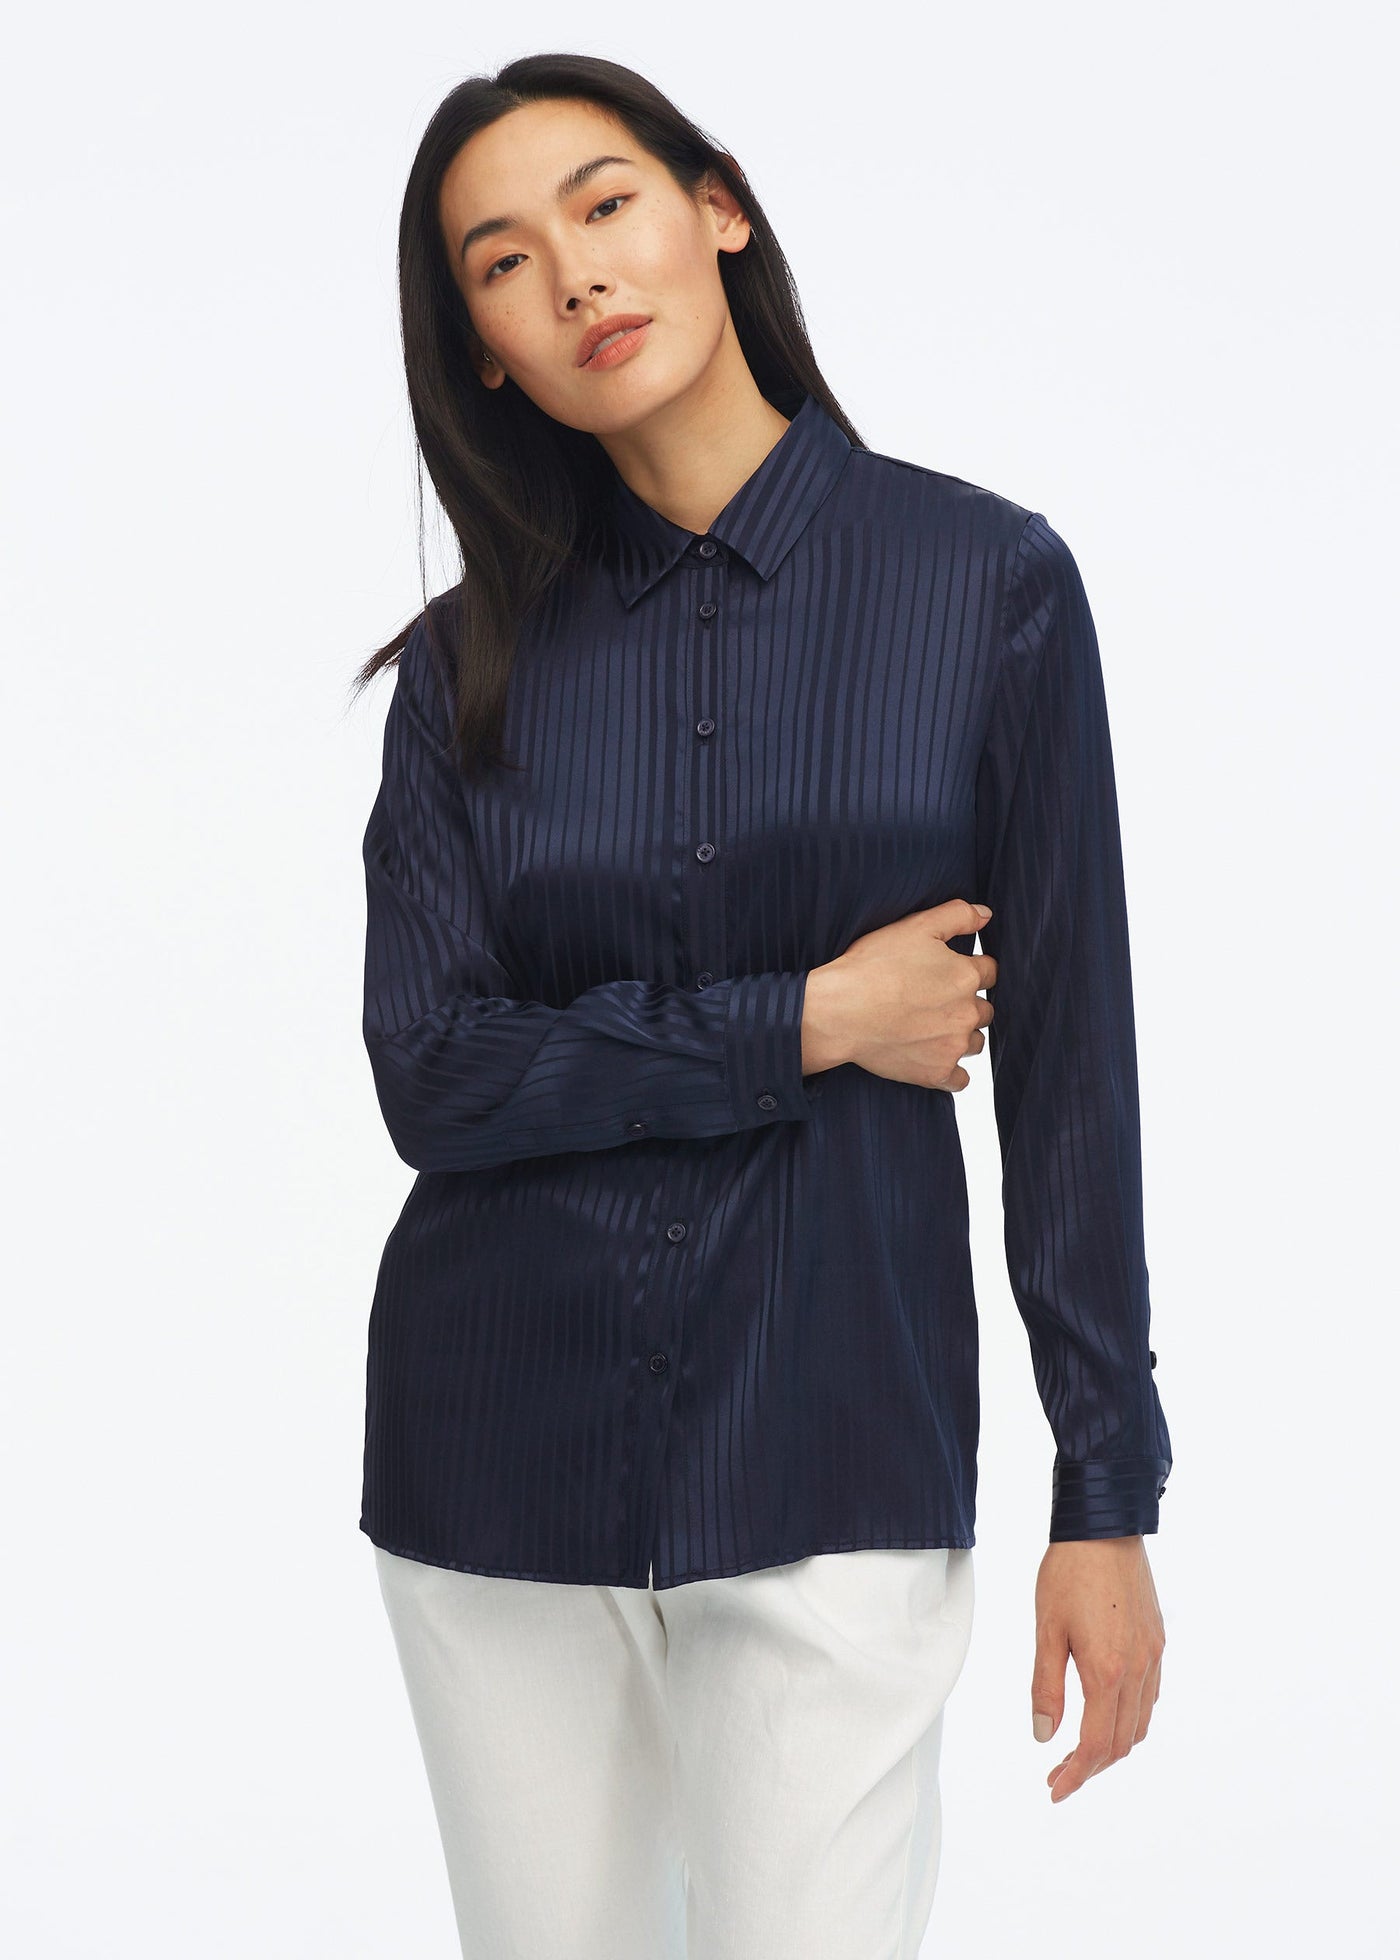 Pinstripe Easy Care Silk Shirt Navy Blue LILYSILK Factory